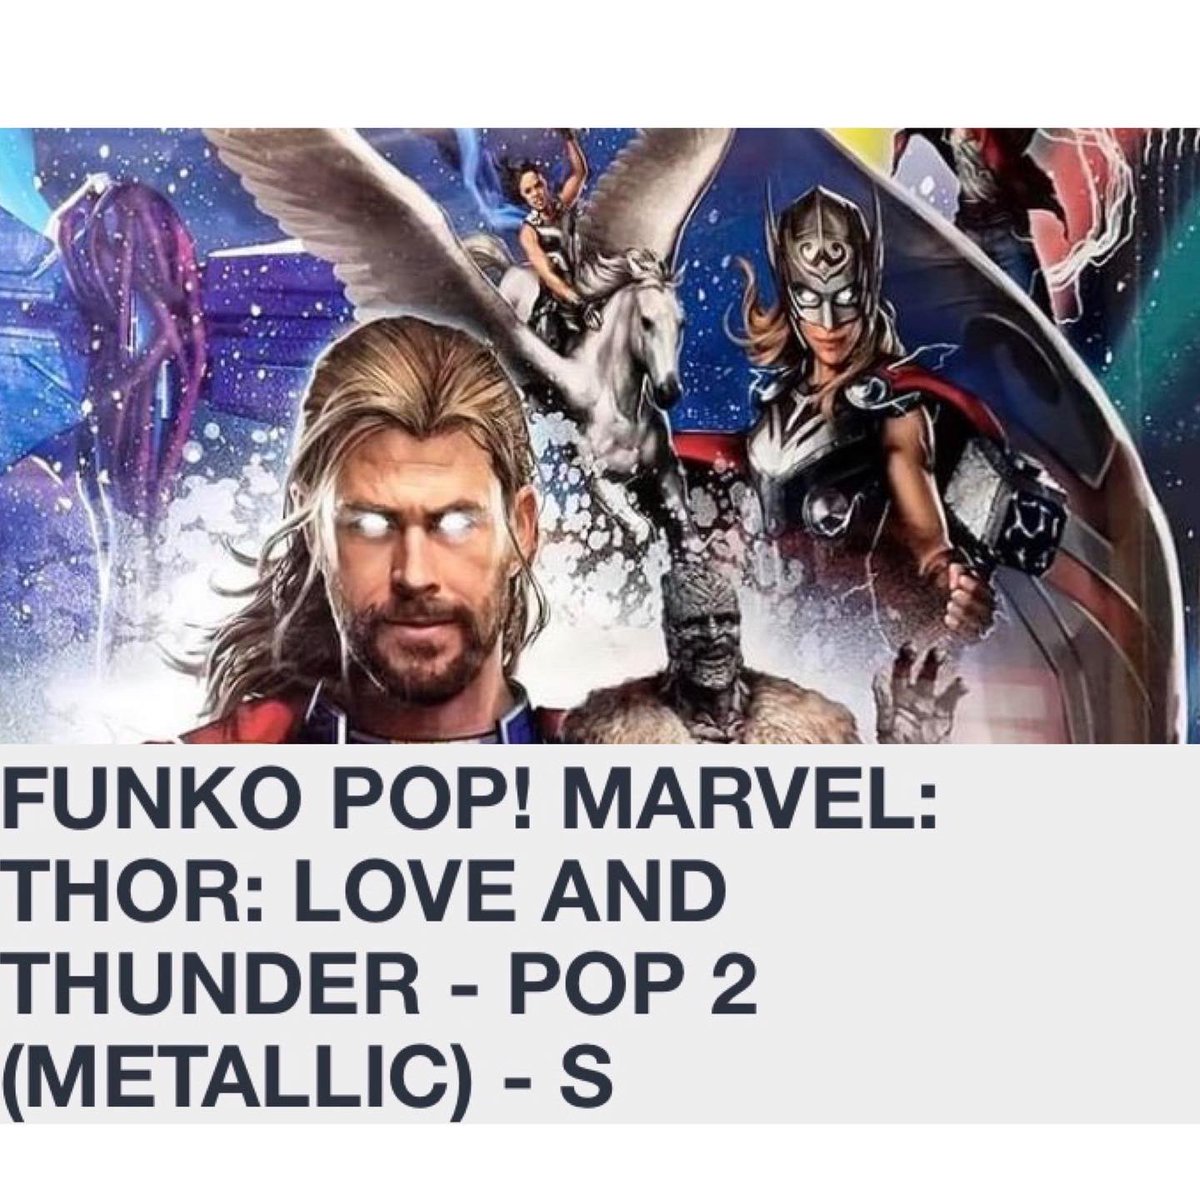 RT @funkomarvelnews: Thor Love and Thunder Metallic Pop is coming soon! 

#ThorLoveAndThunder https://t.co/tYOcU3bMRD